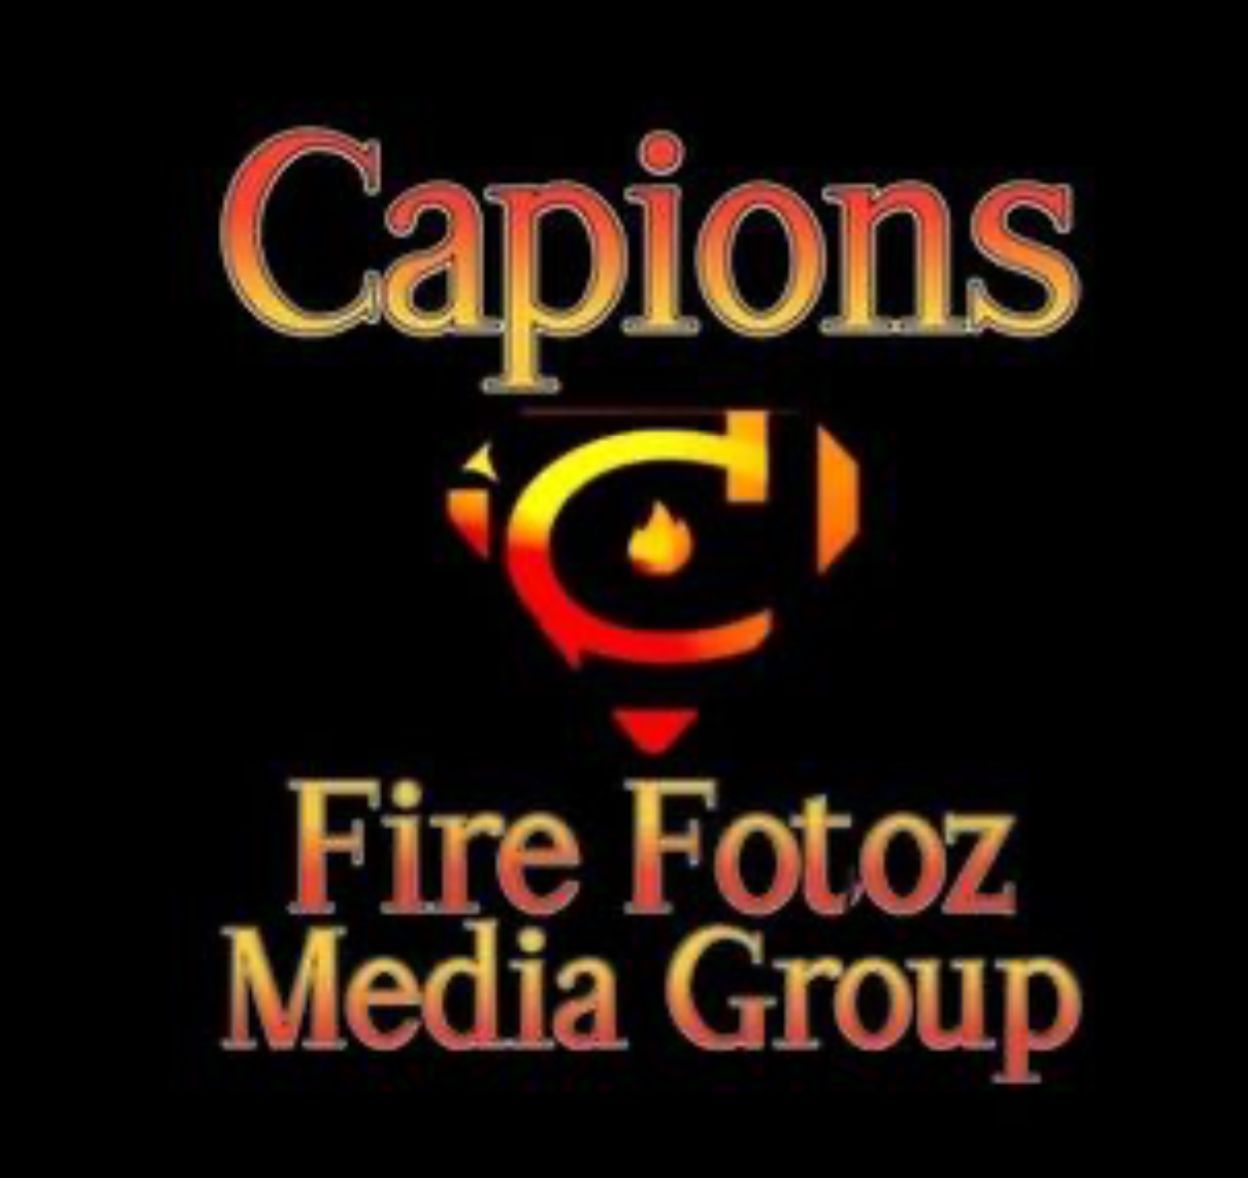 a logo for captions fire fotoz media group